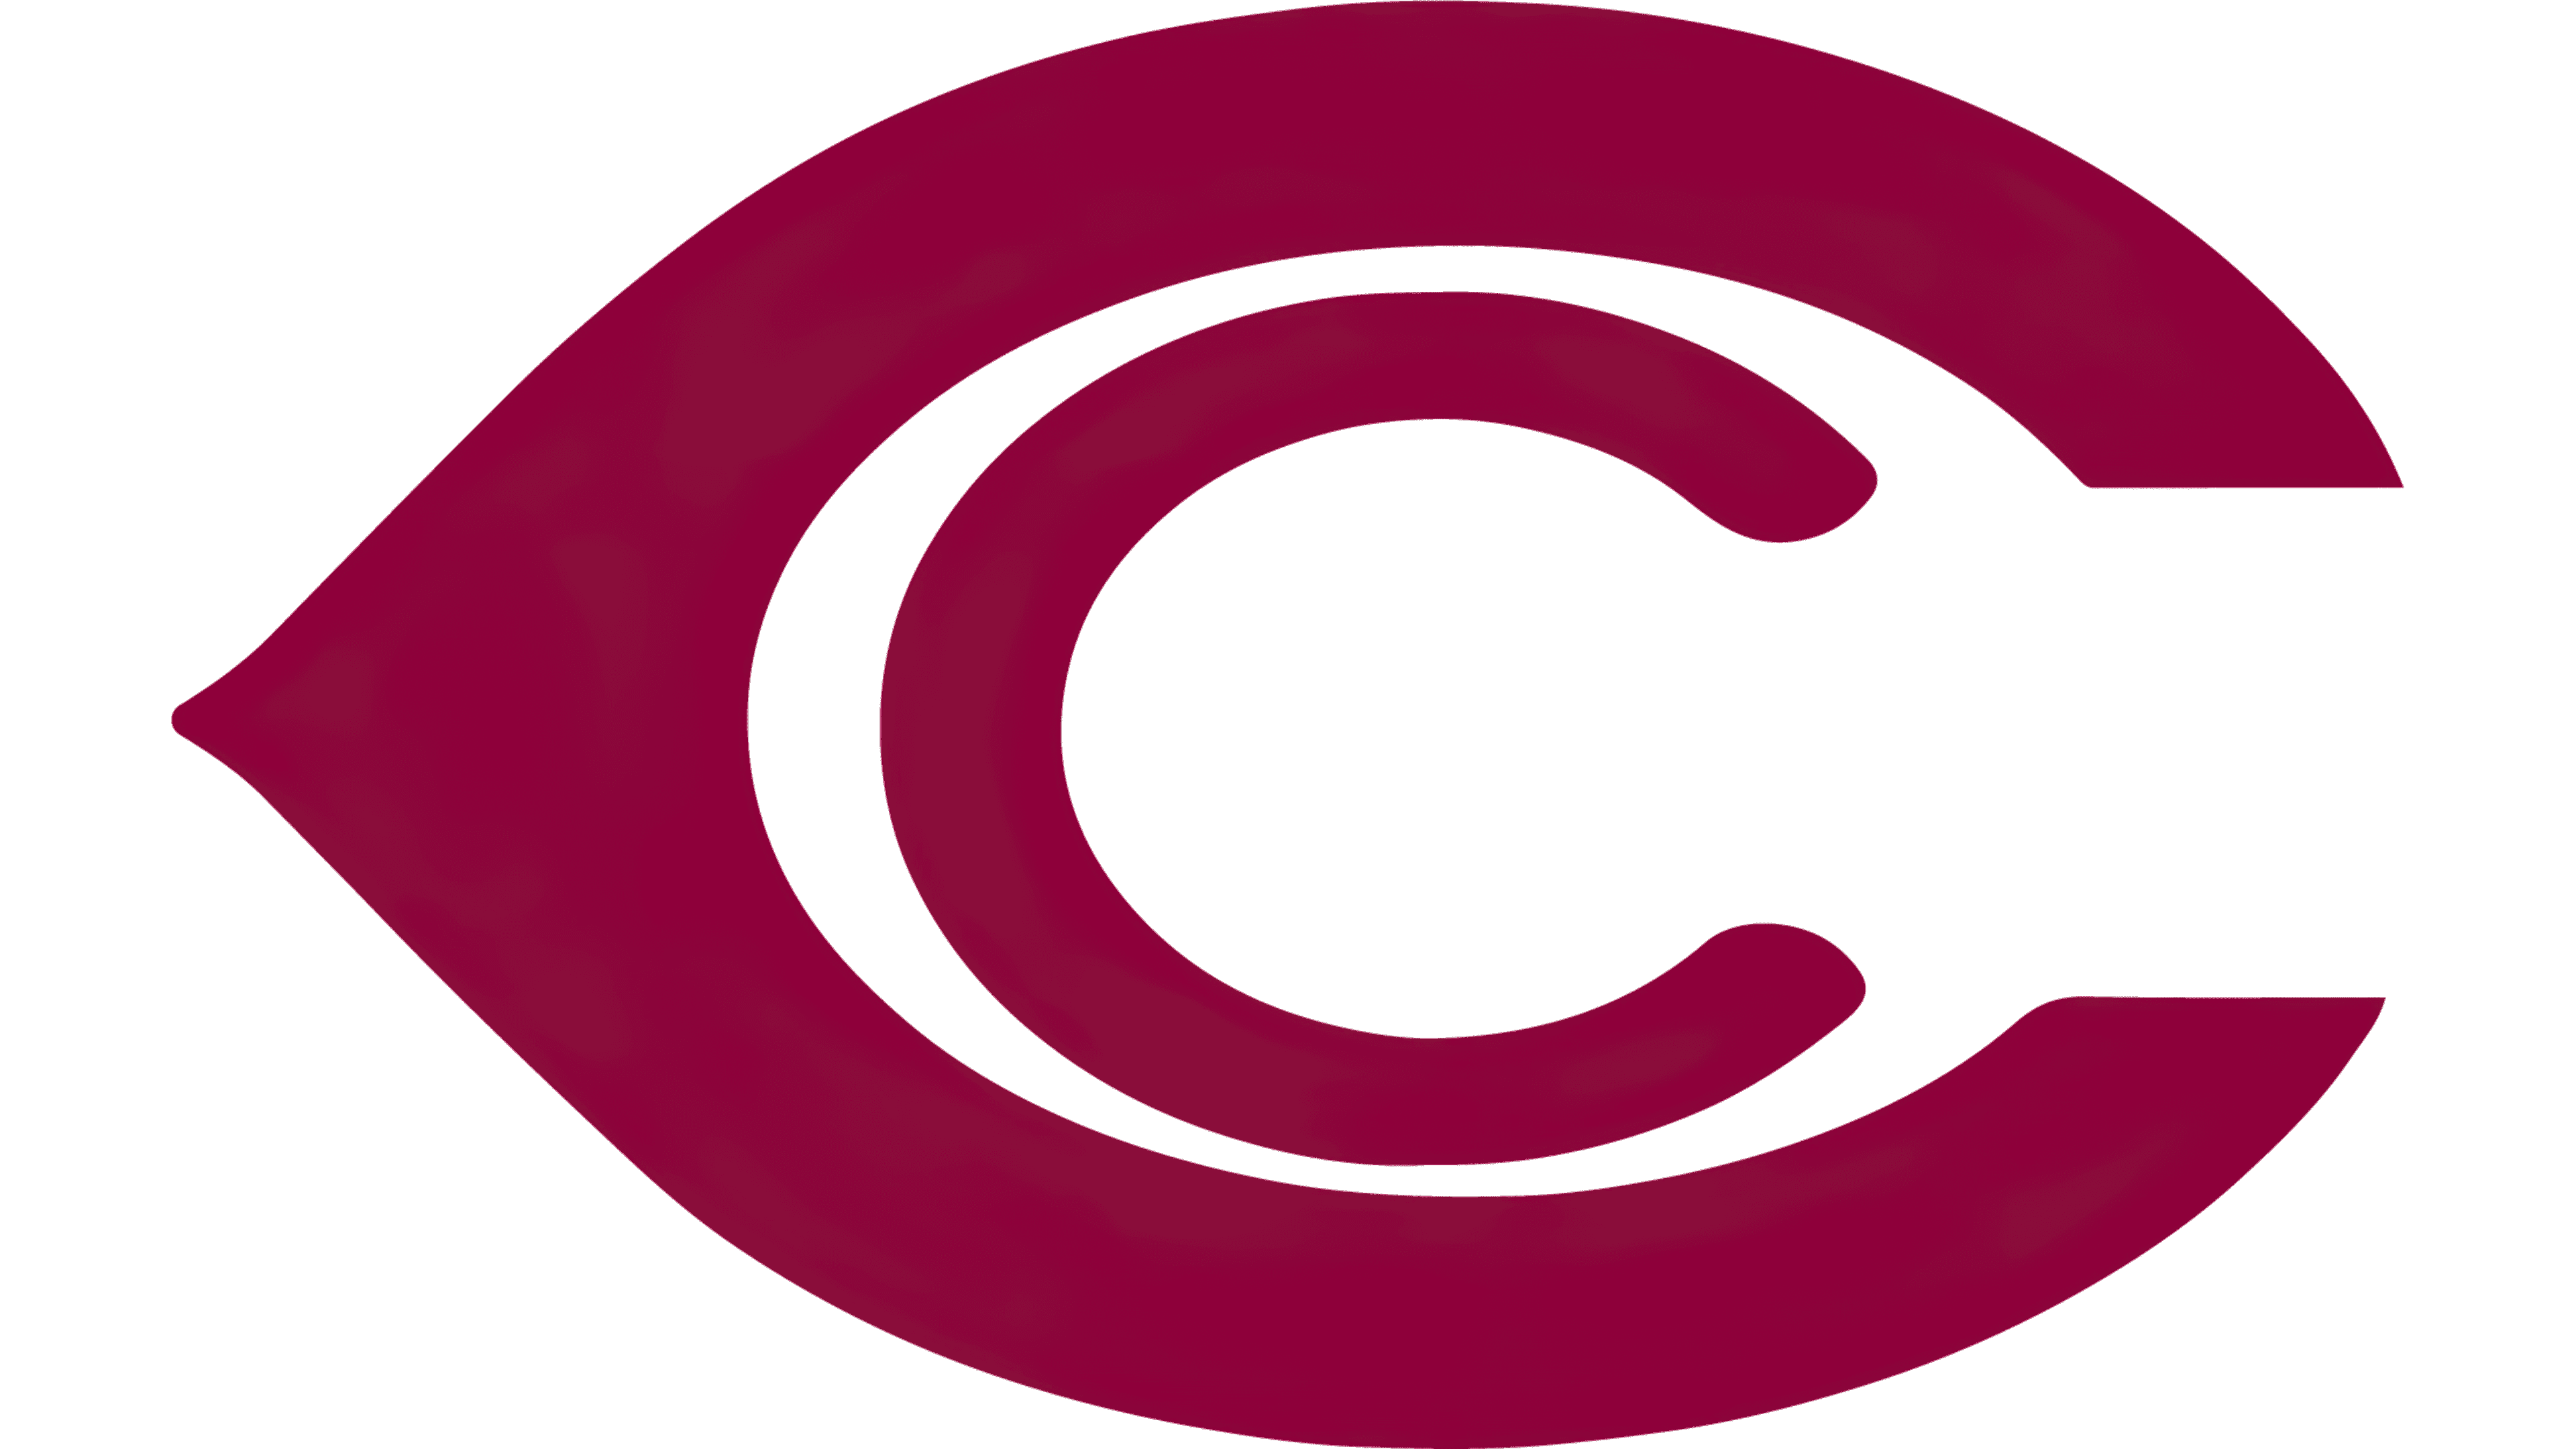 Arizona Cardinals Wordmark Logo - National Football League (NFL) - Chris  Creamer's Sports Logos Page 